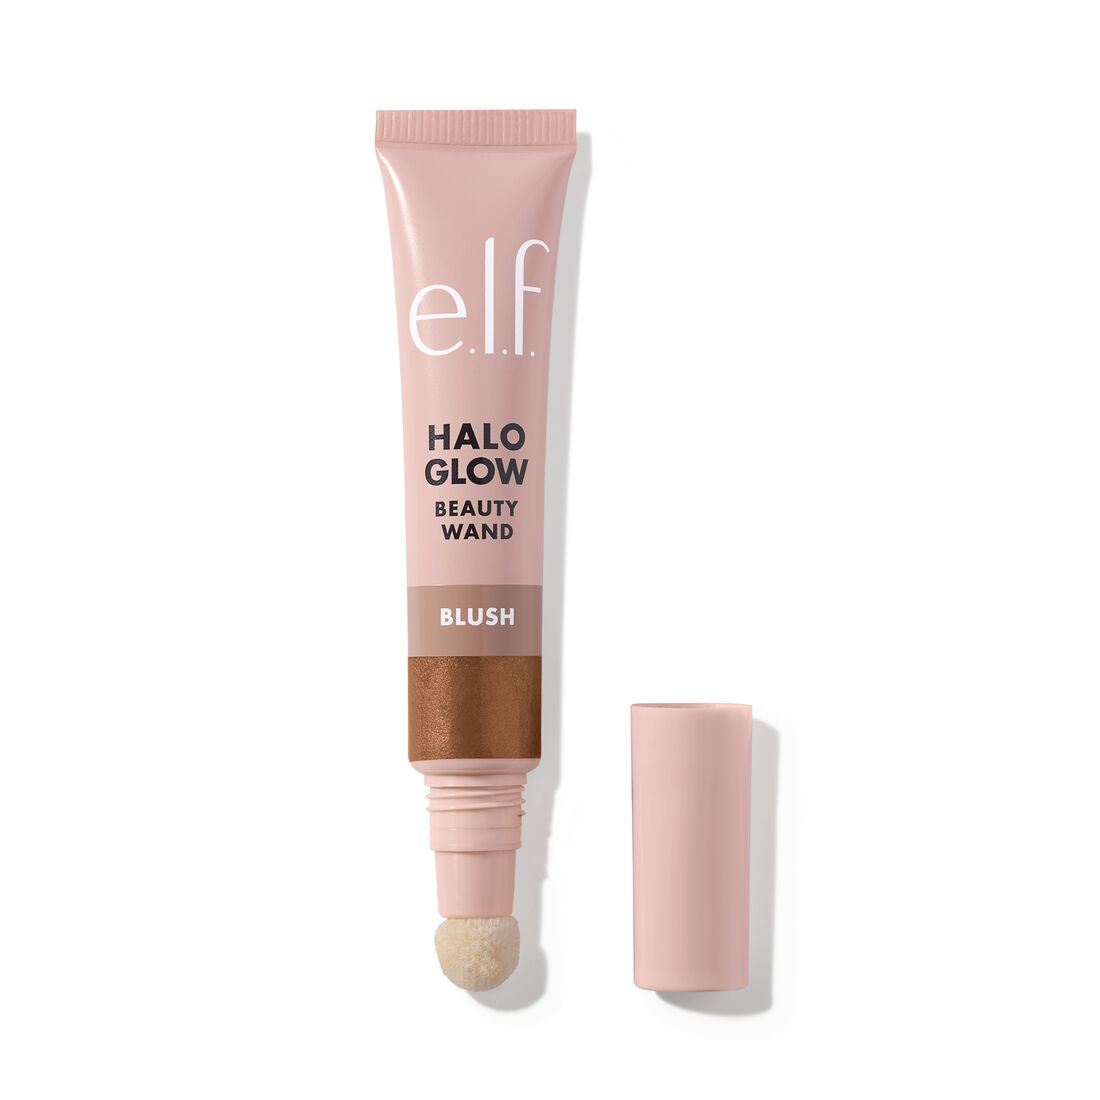 e.l.f. Halo Glow Blush Beauty Wand Liquid filter Volare Makeup Magic Hour - Bronze Gold for Fair/Tan  